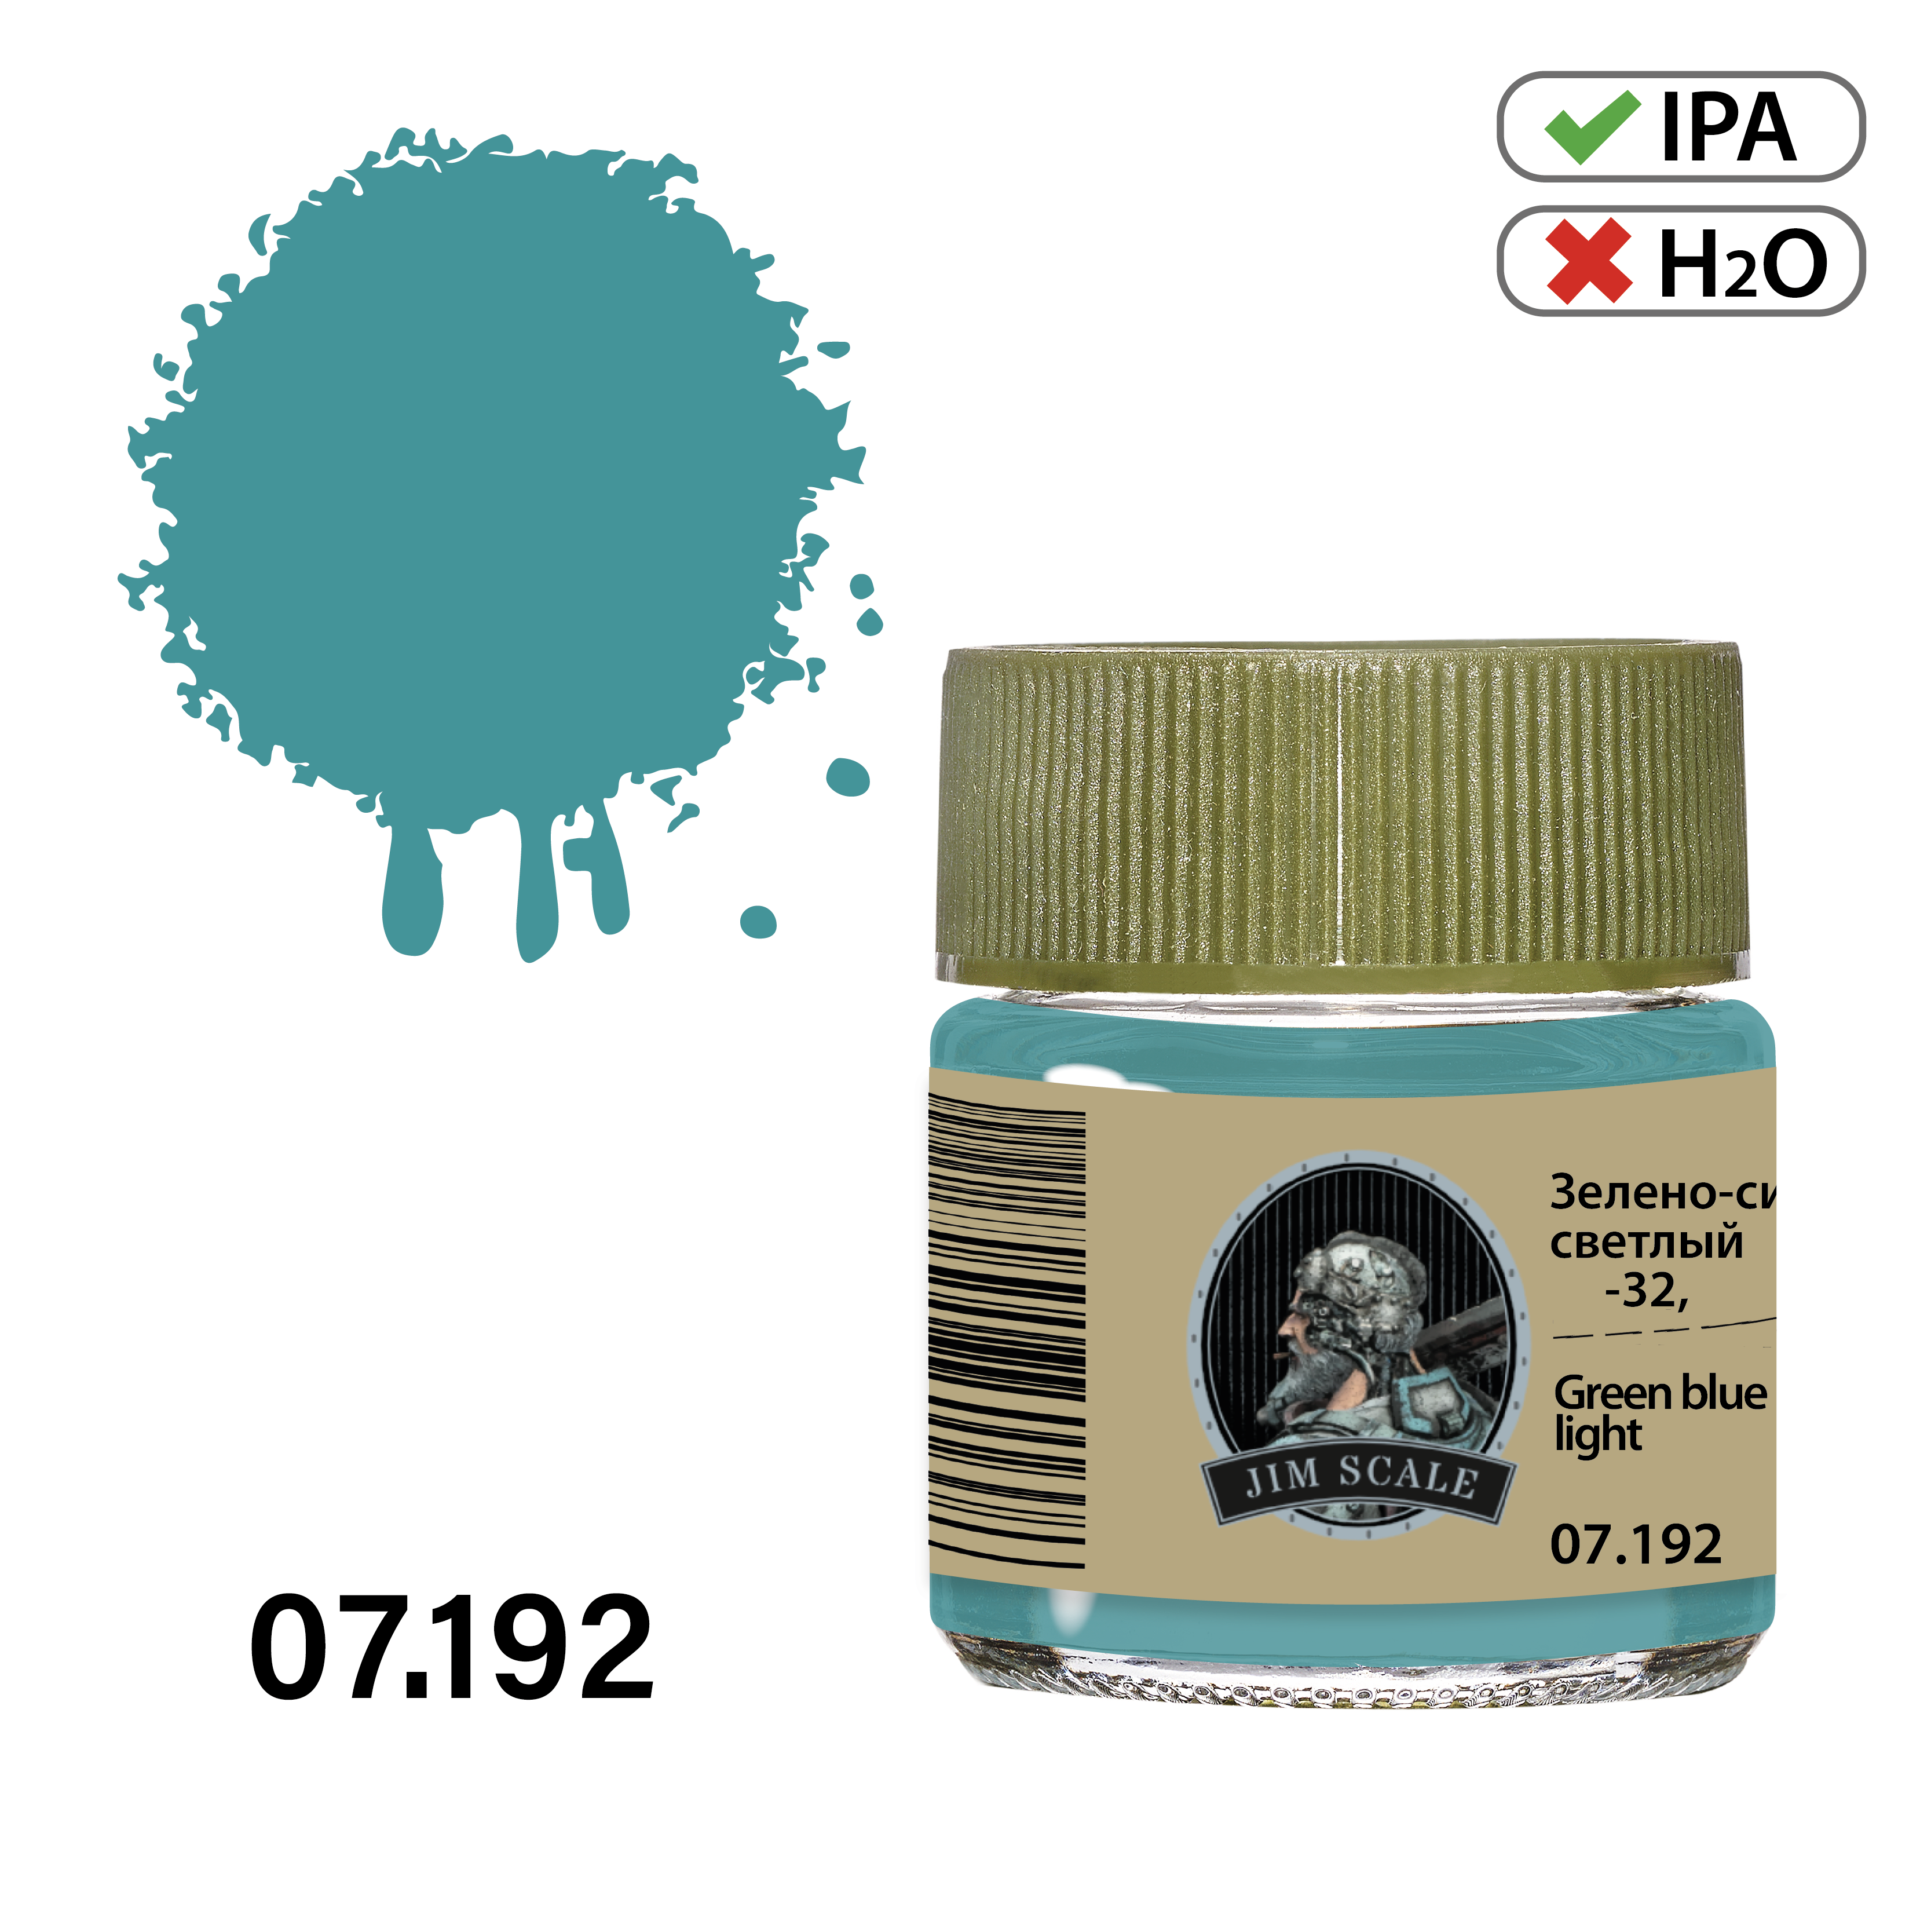 07.192 Jim Scale Alcohol paint color Green-blue Light blue (Dry-34), 10 ml.